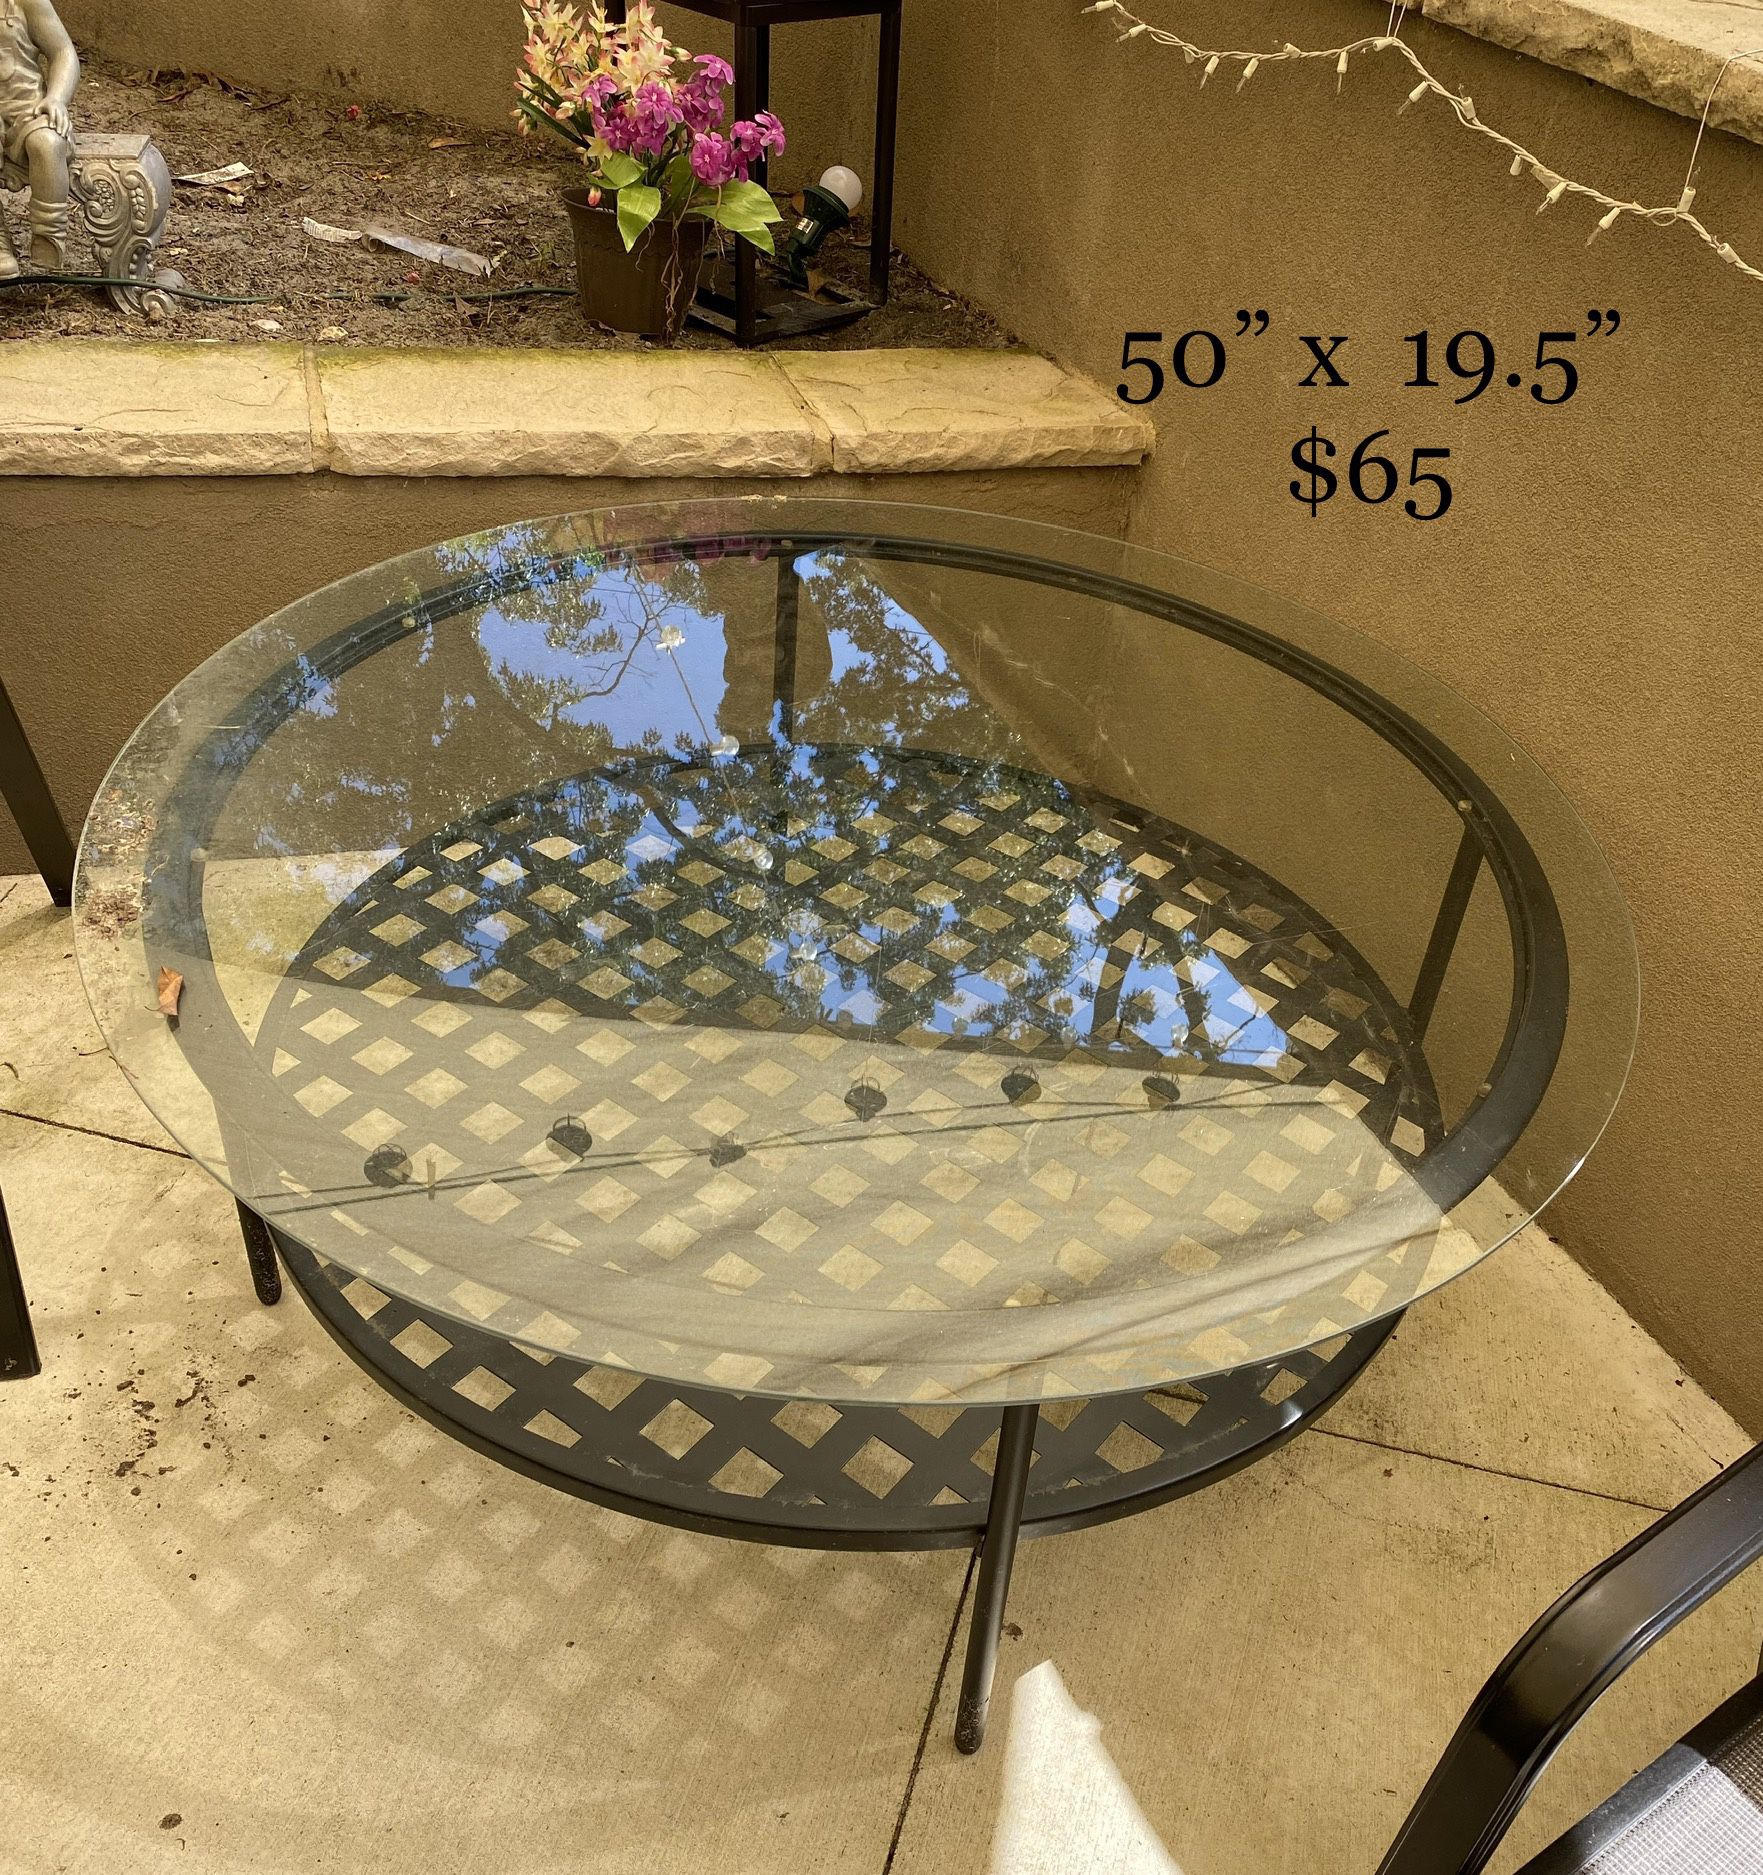 Large outside table 50”. $65